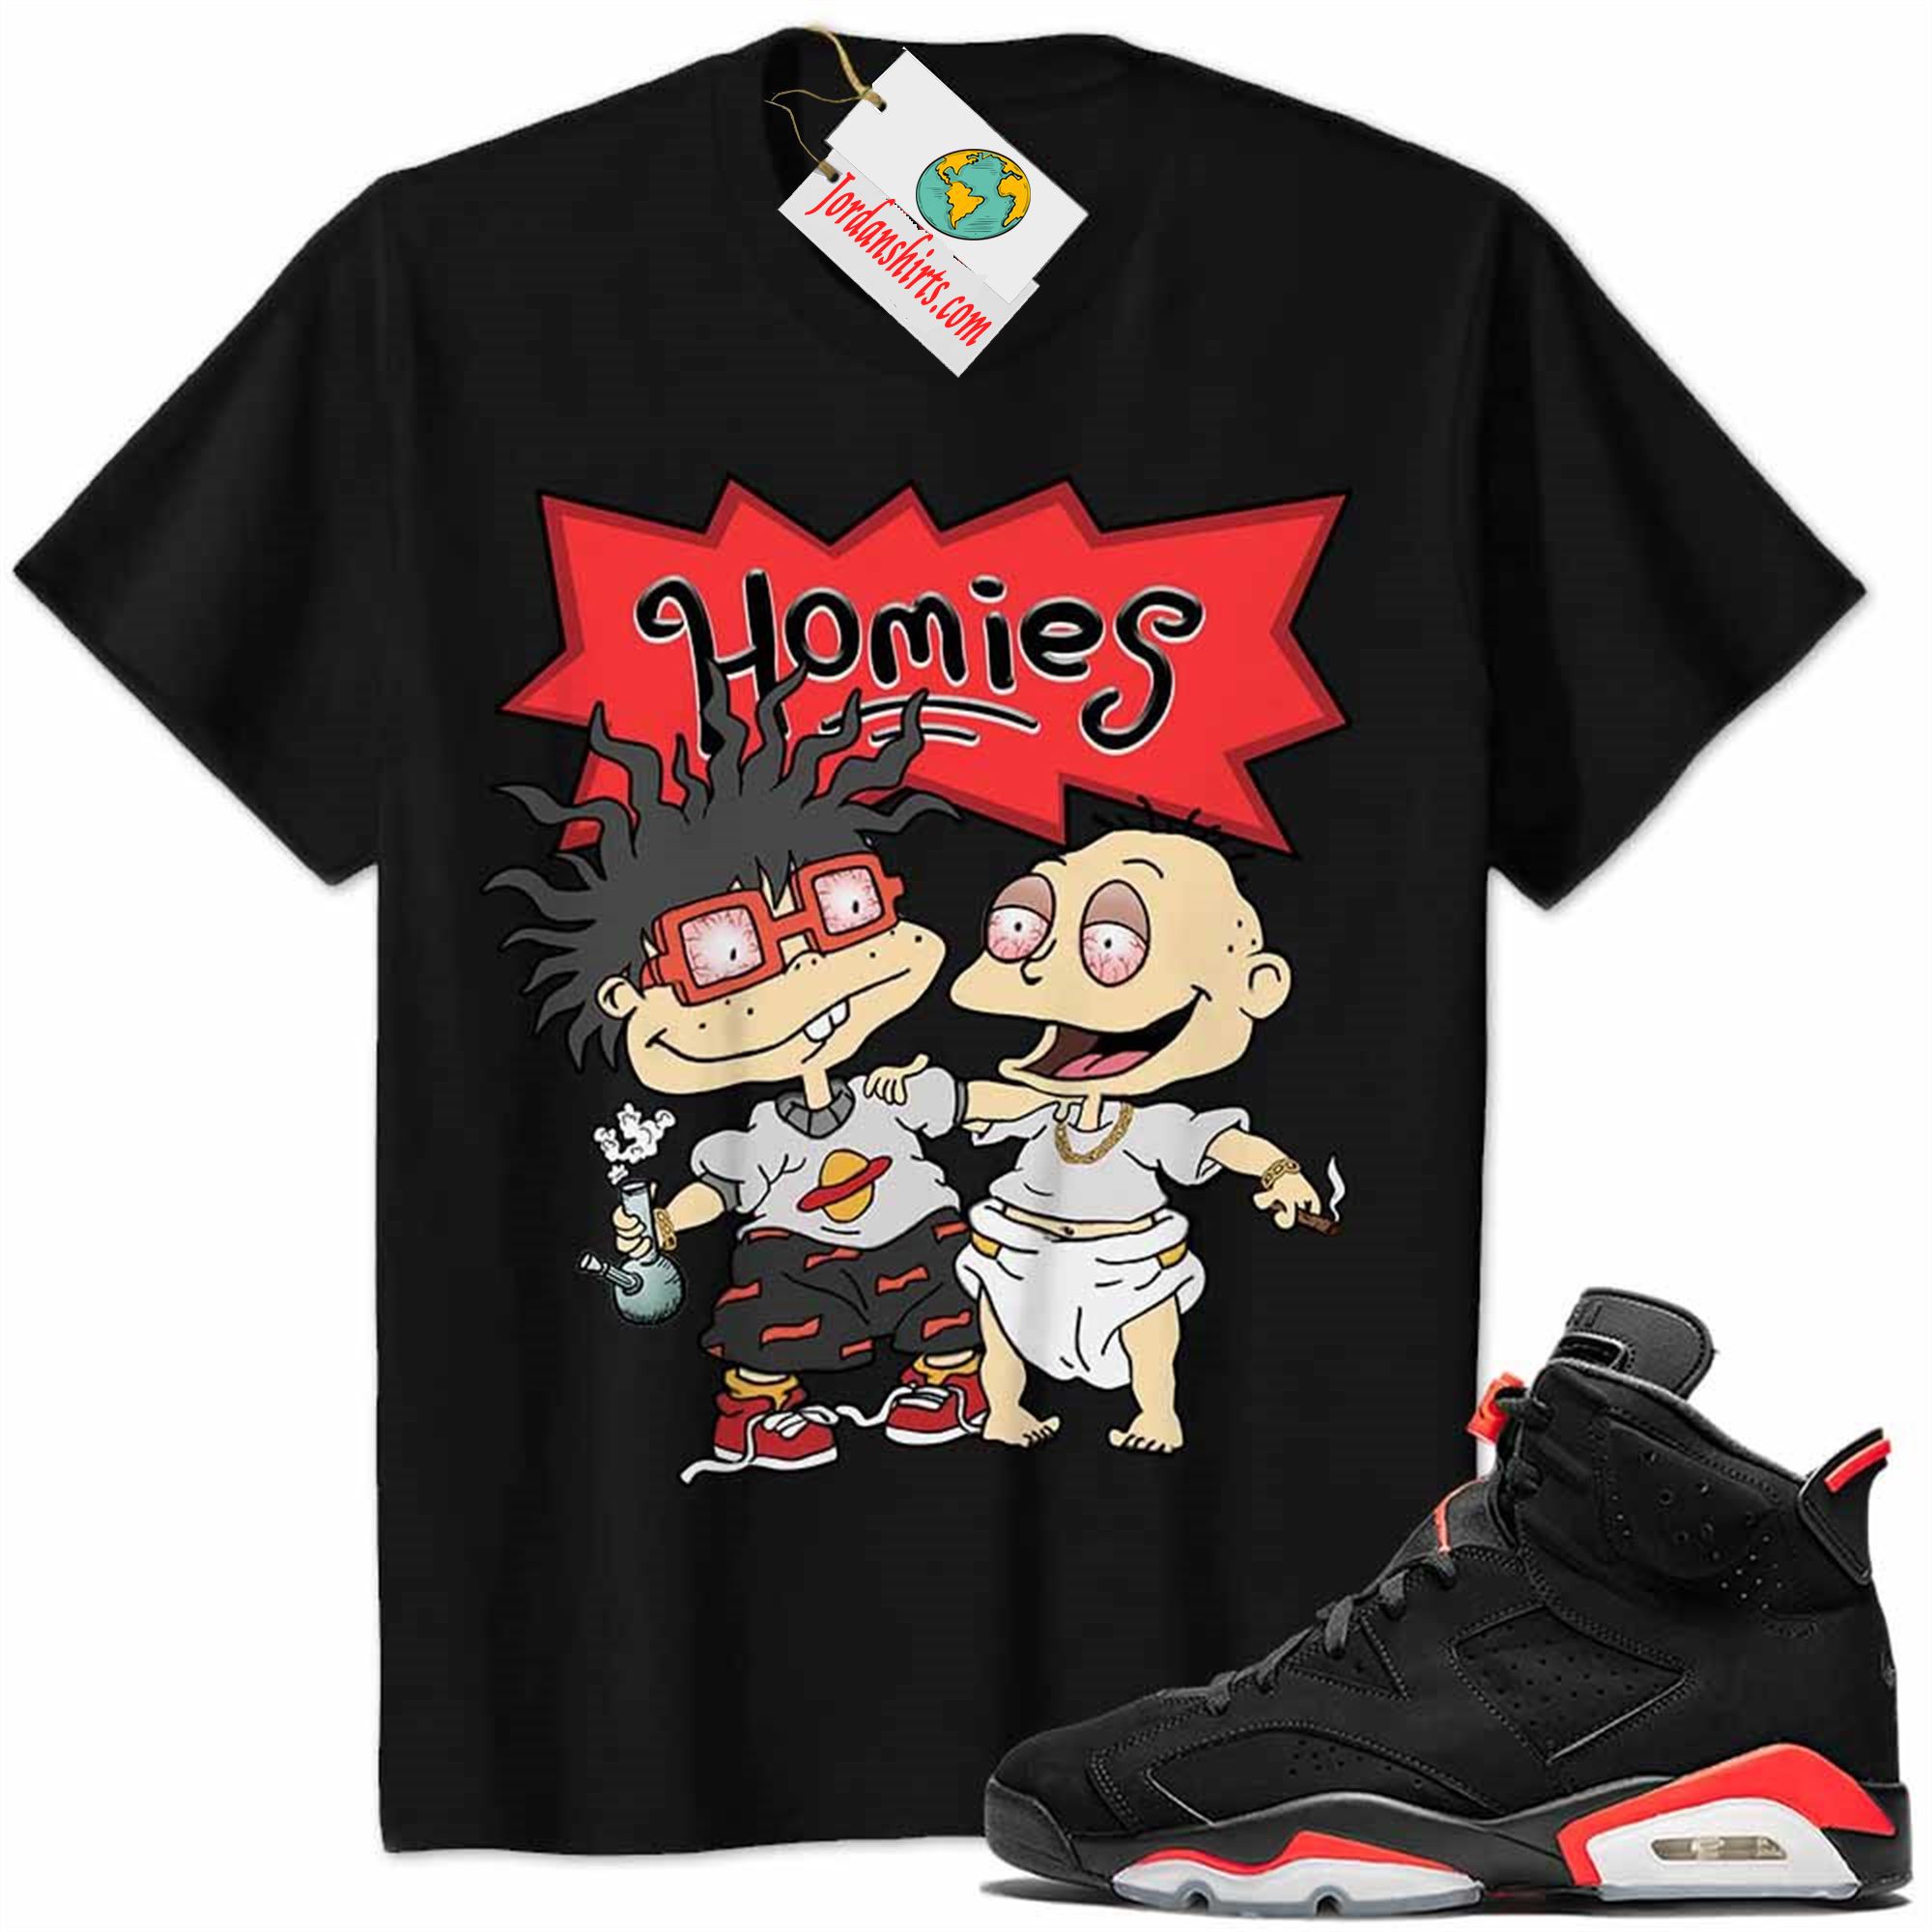 Jordan 6 Shirt, Jordan 6 Infrared Shirt Hommies Tommy Pickles Chuckie Finster Rugrats Black Full Size Up To 5xl